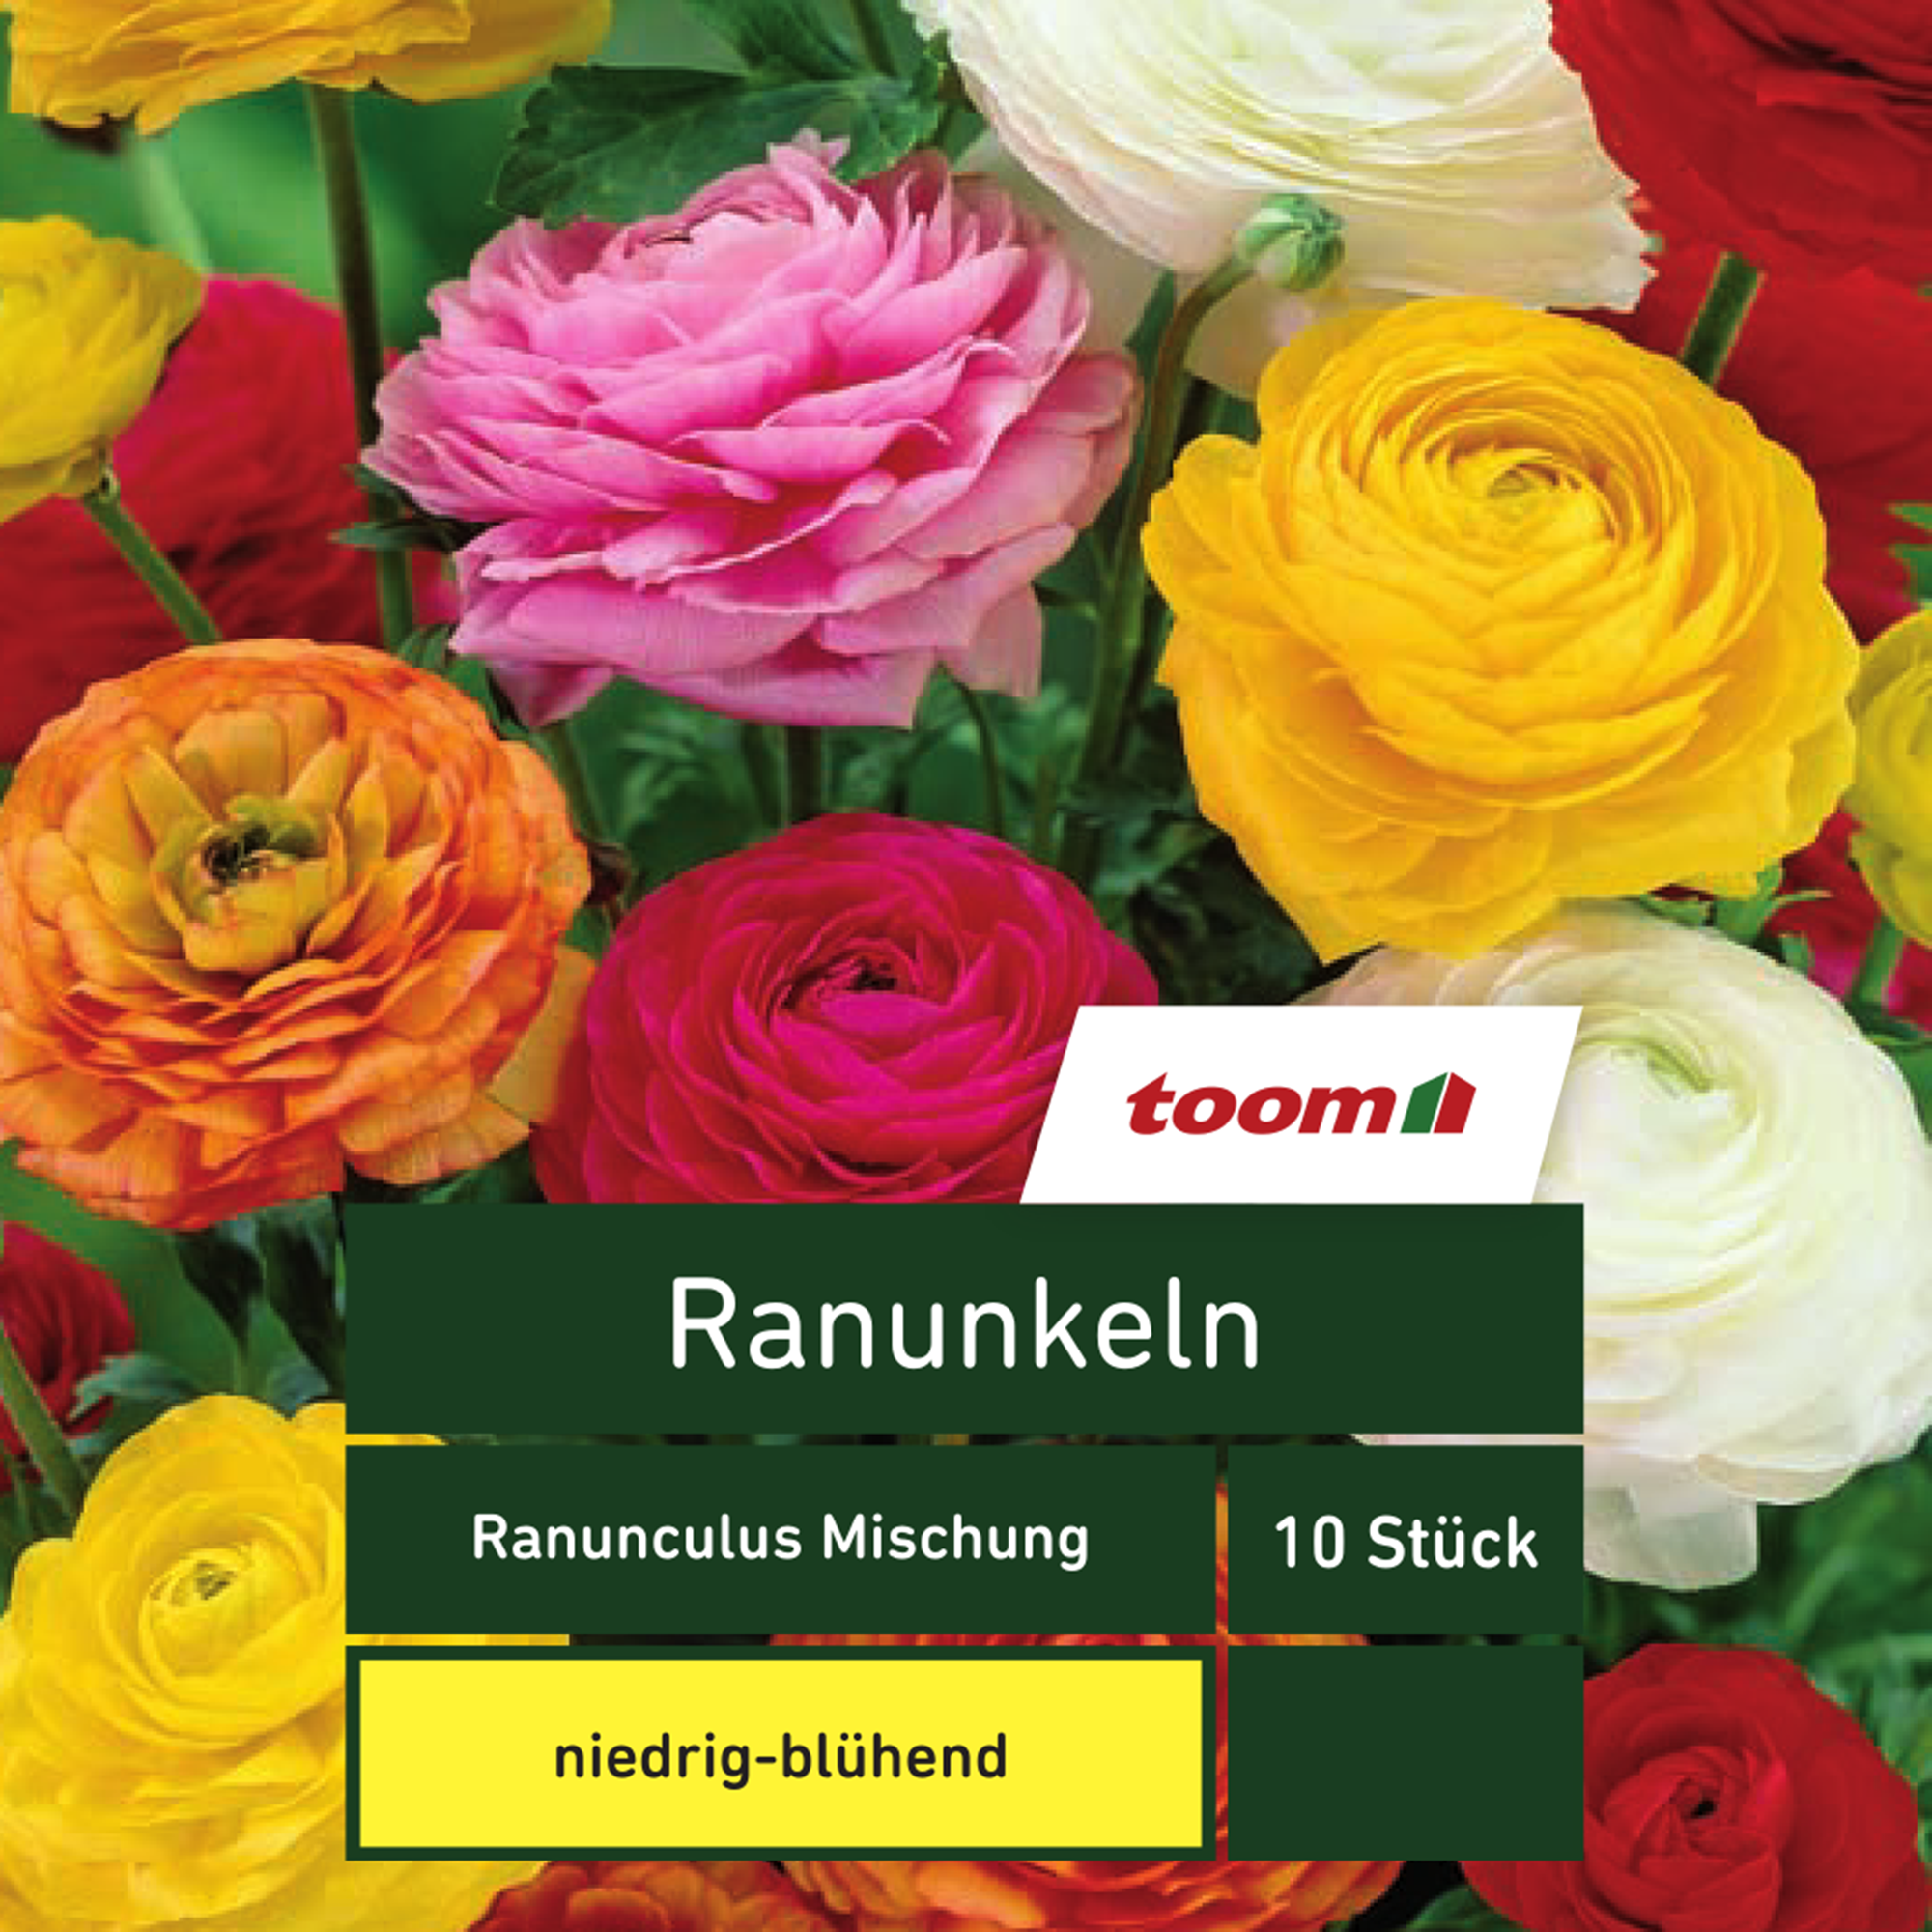 Ranunkeln 'Ranunculus', 10 Stück, mehrfarbig + product picture